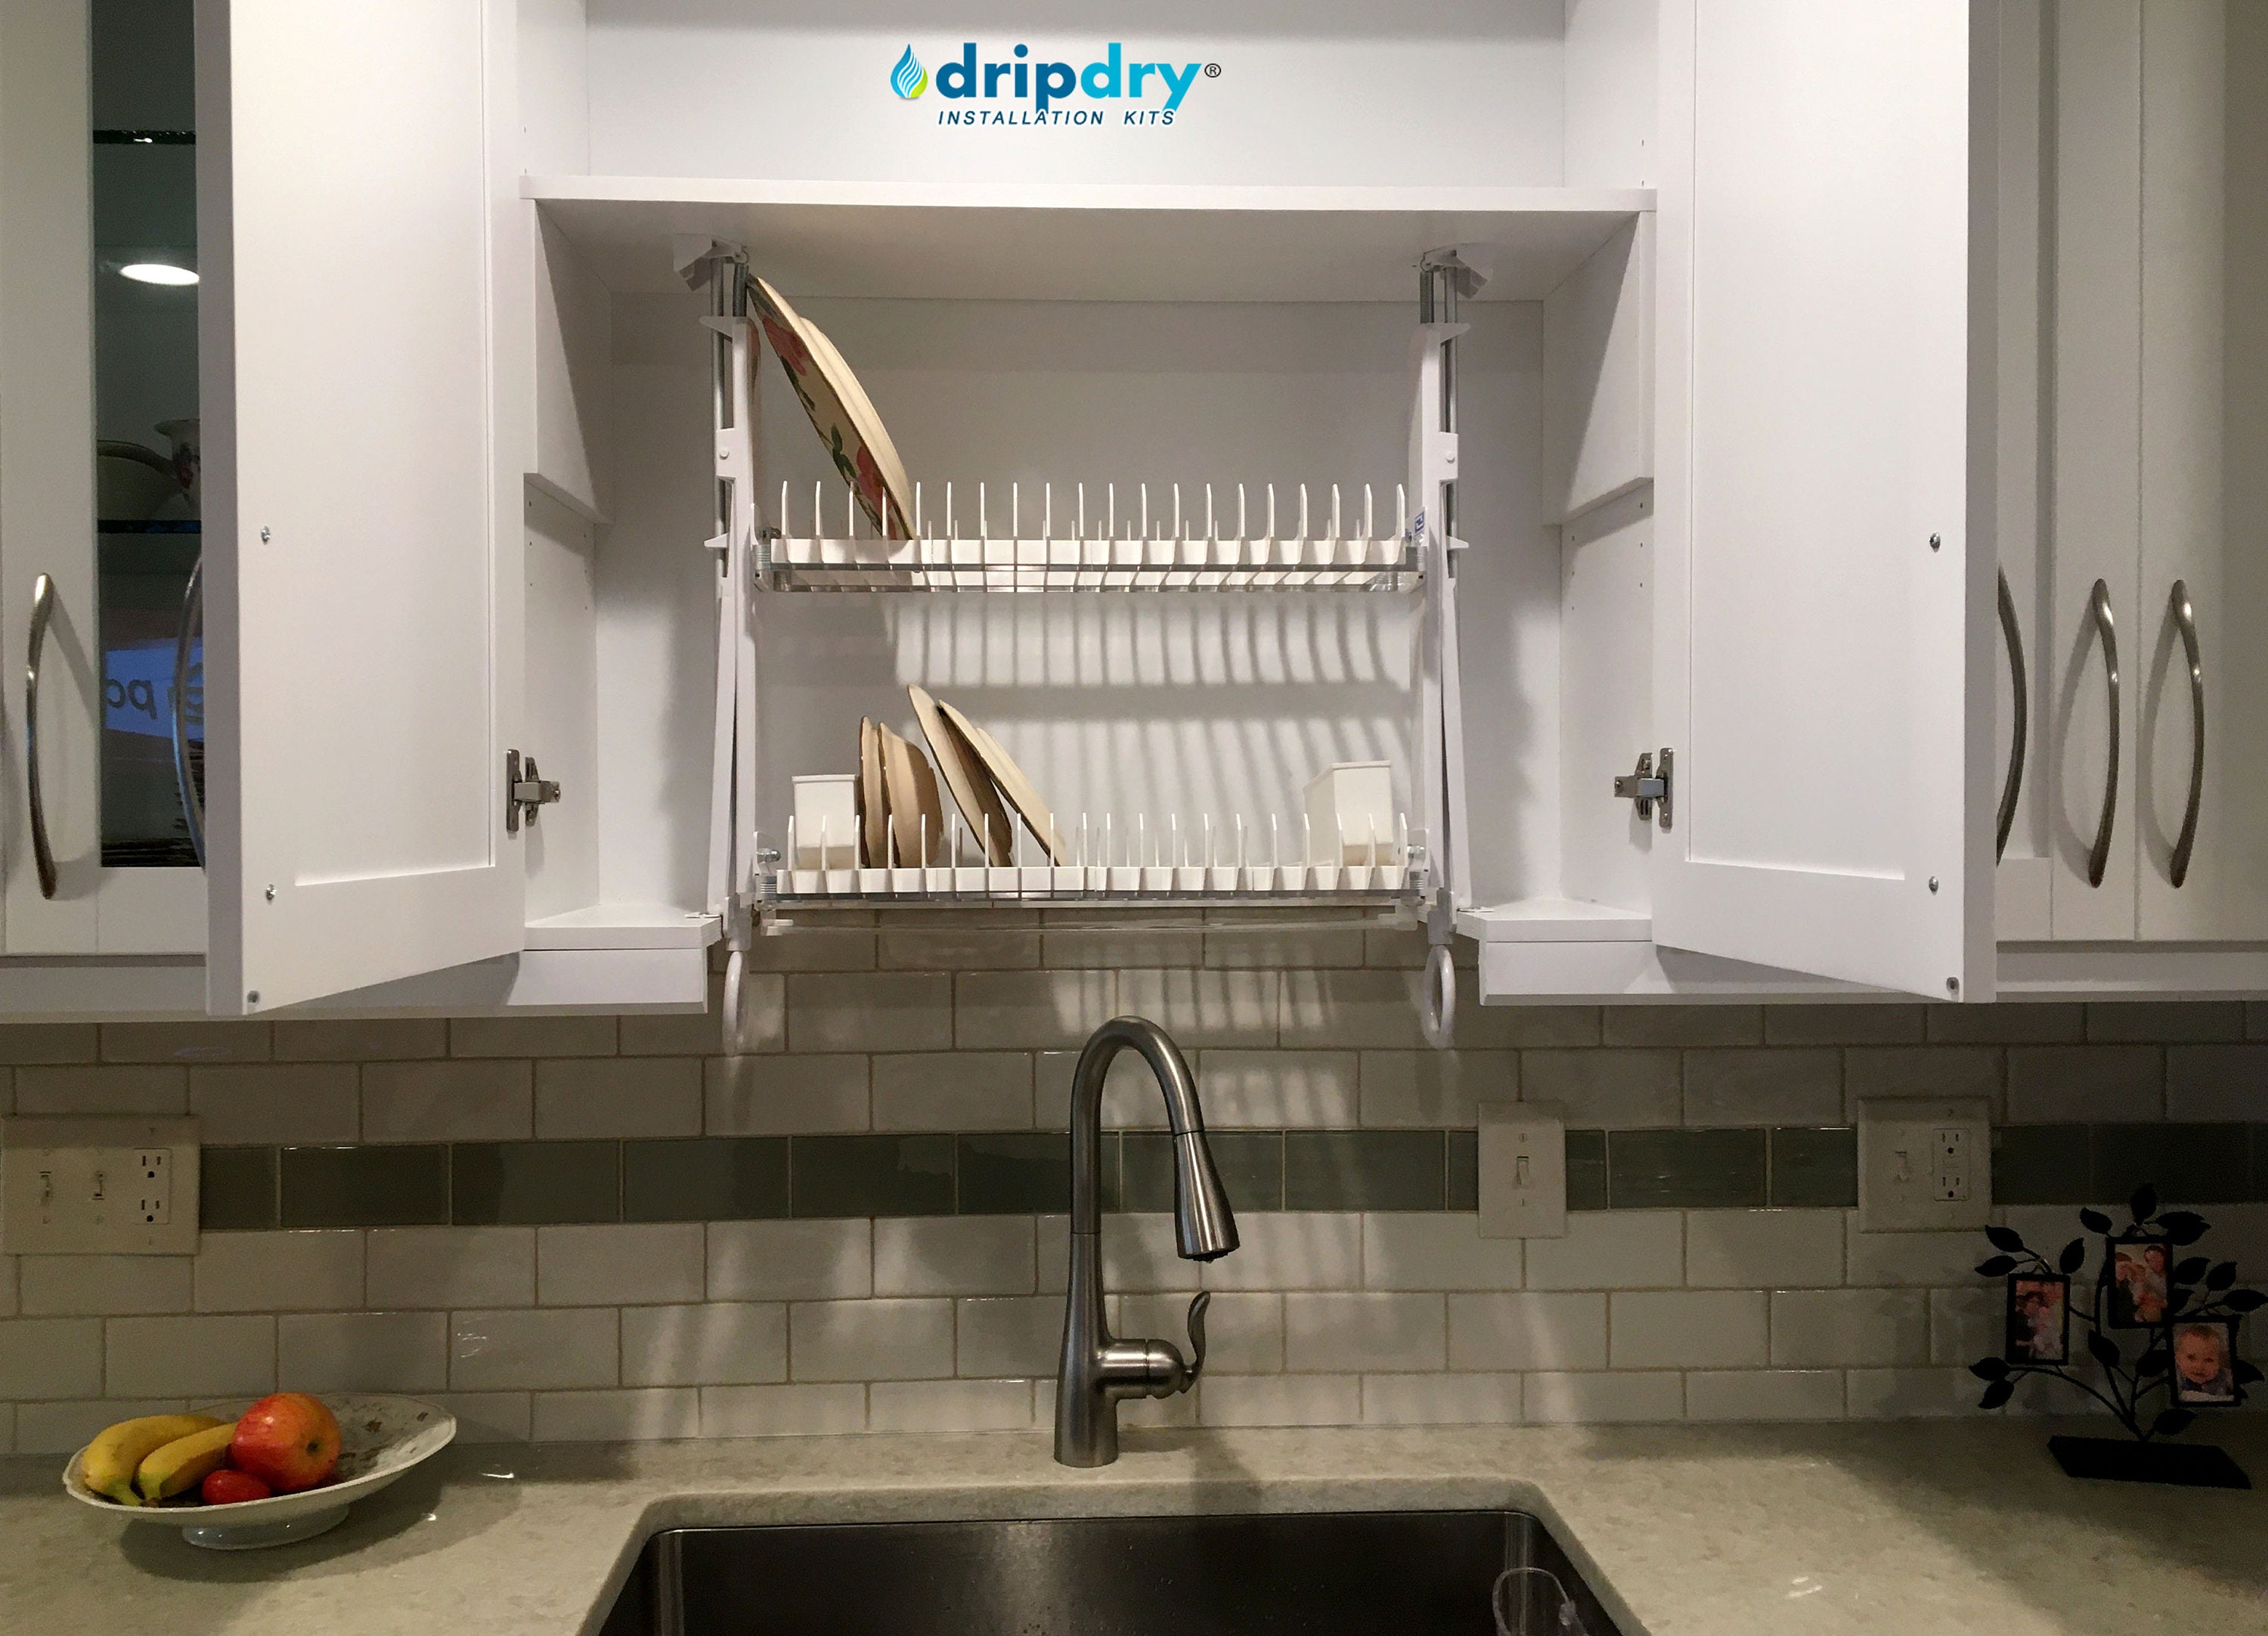 Dish drying rack integrated in cupboard : r/mildlyinteresting